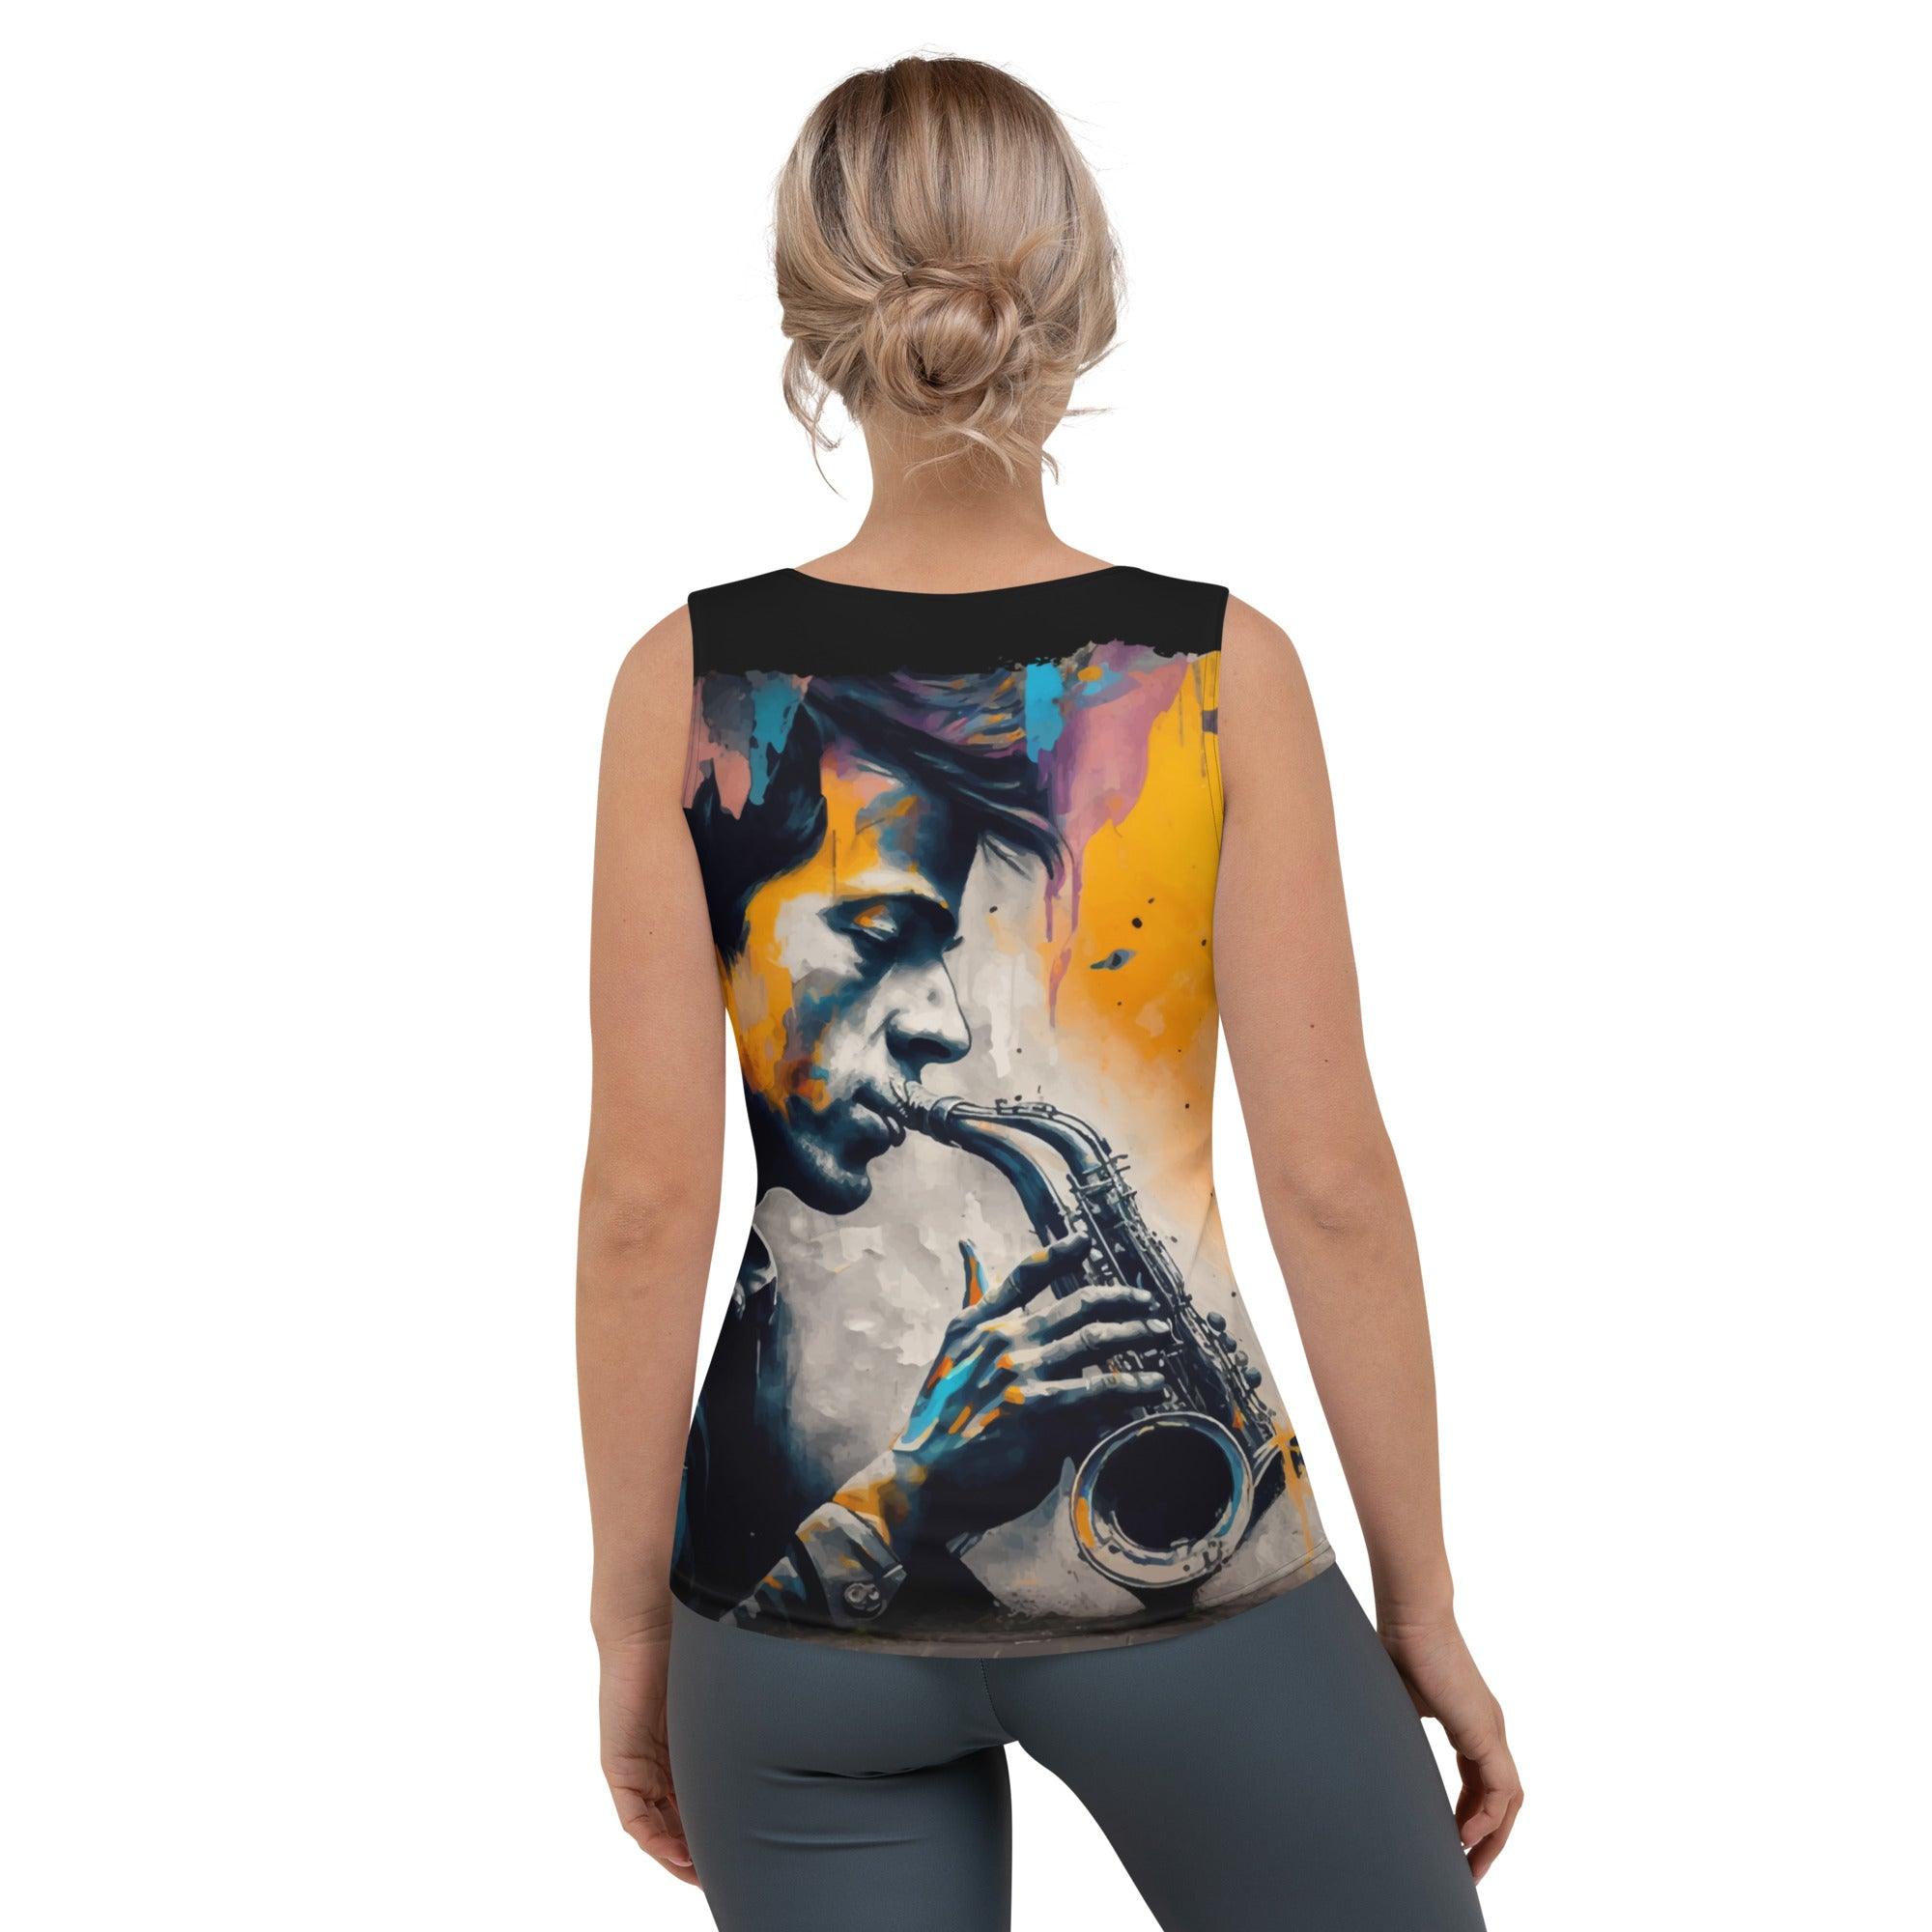 Saxophone Sorcery Sublimation Cut & Sew Tank Top - Beyond T-shirts